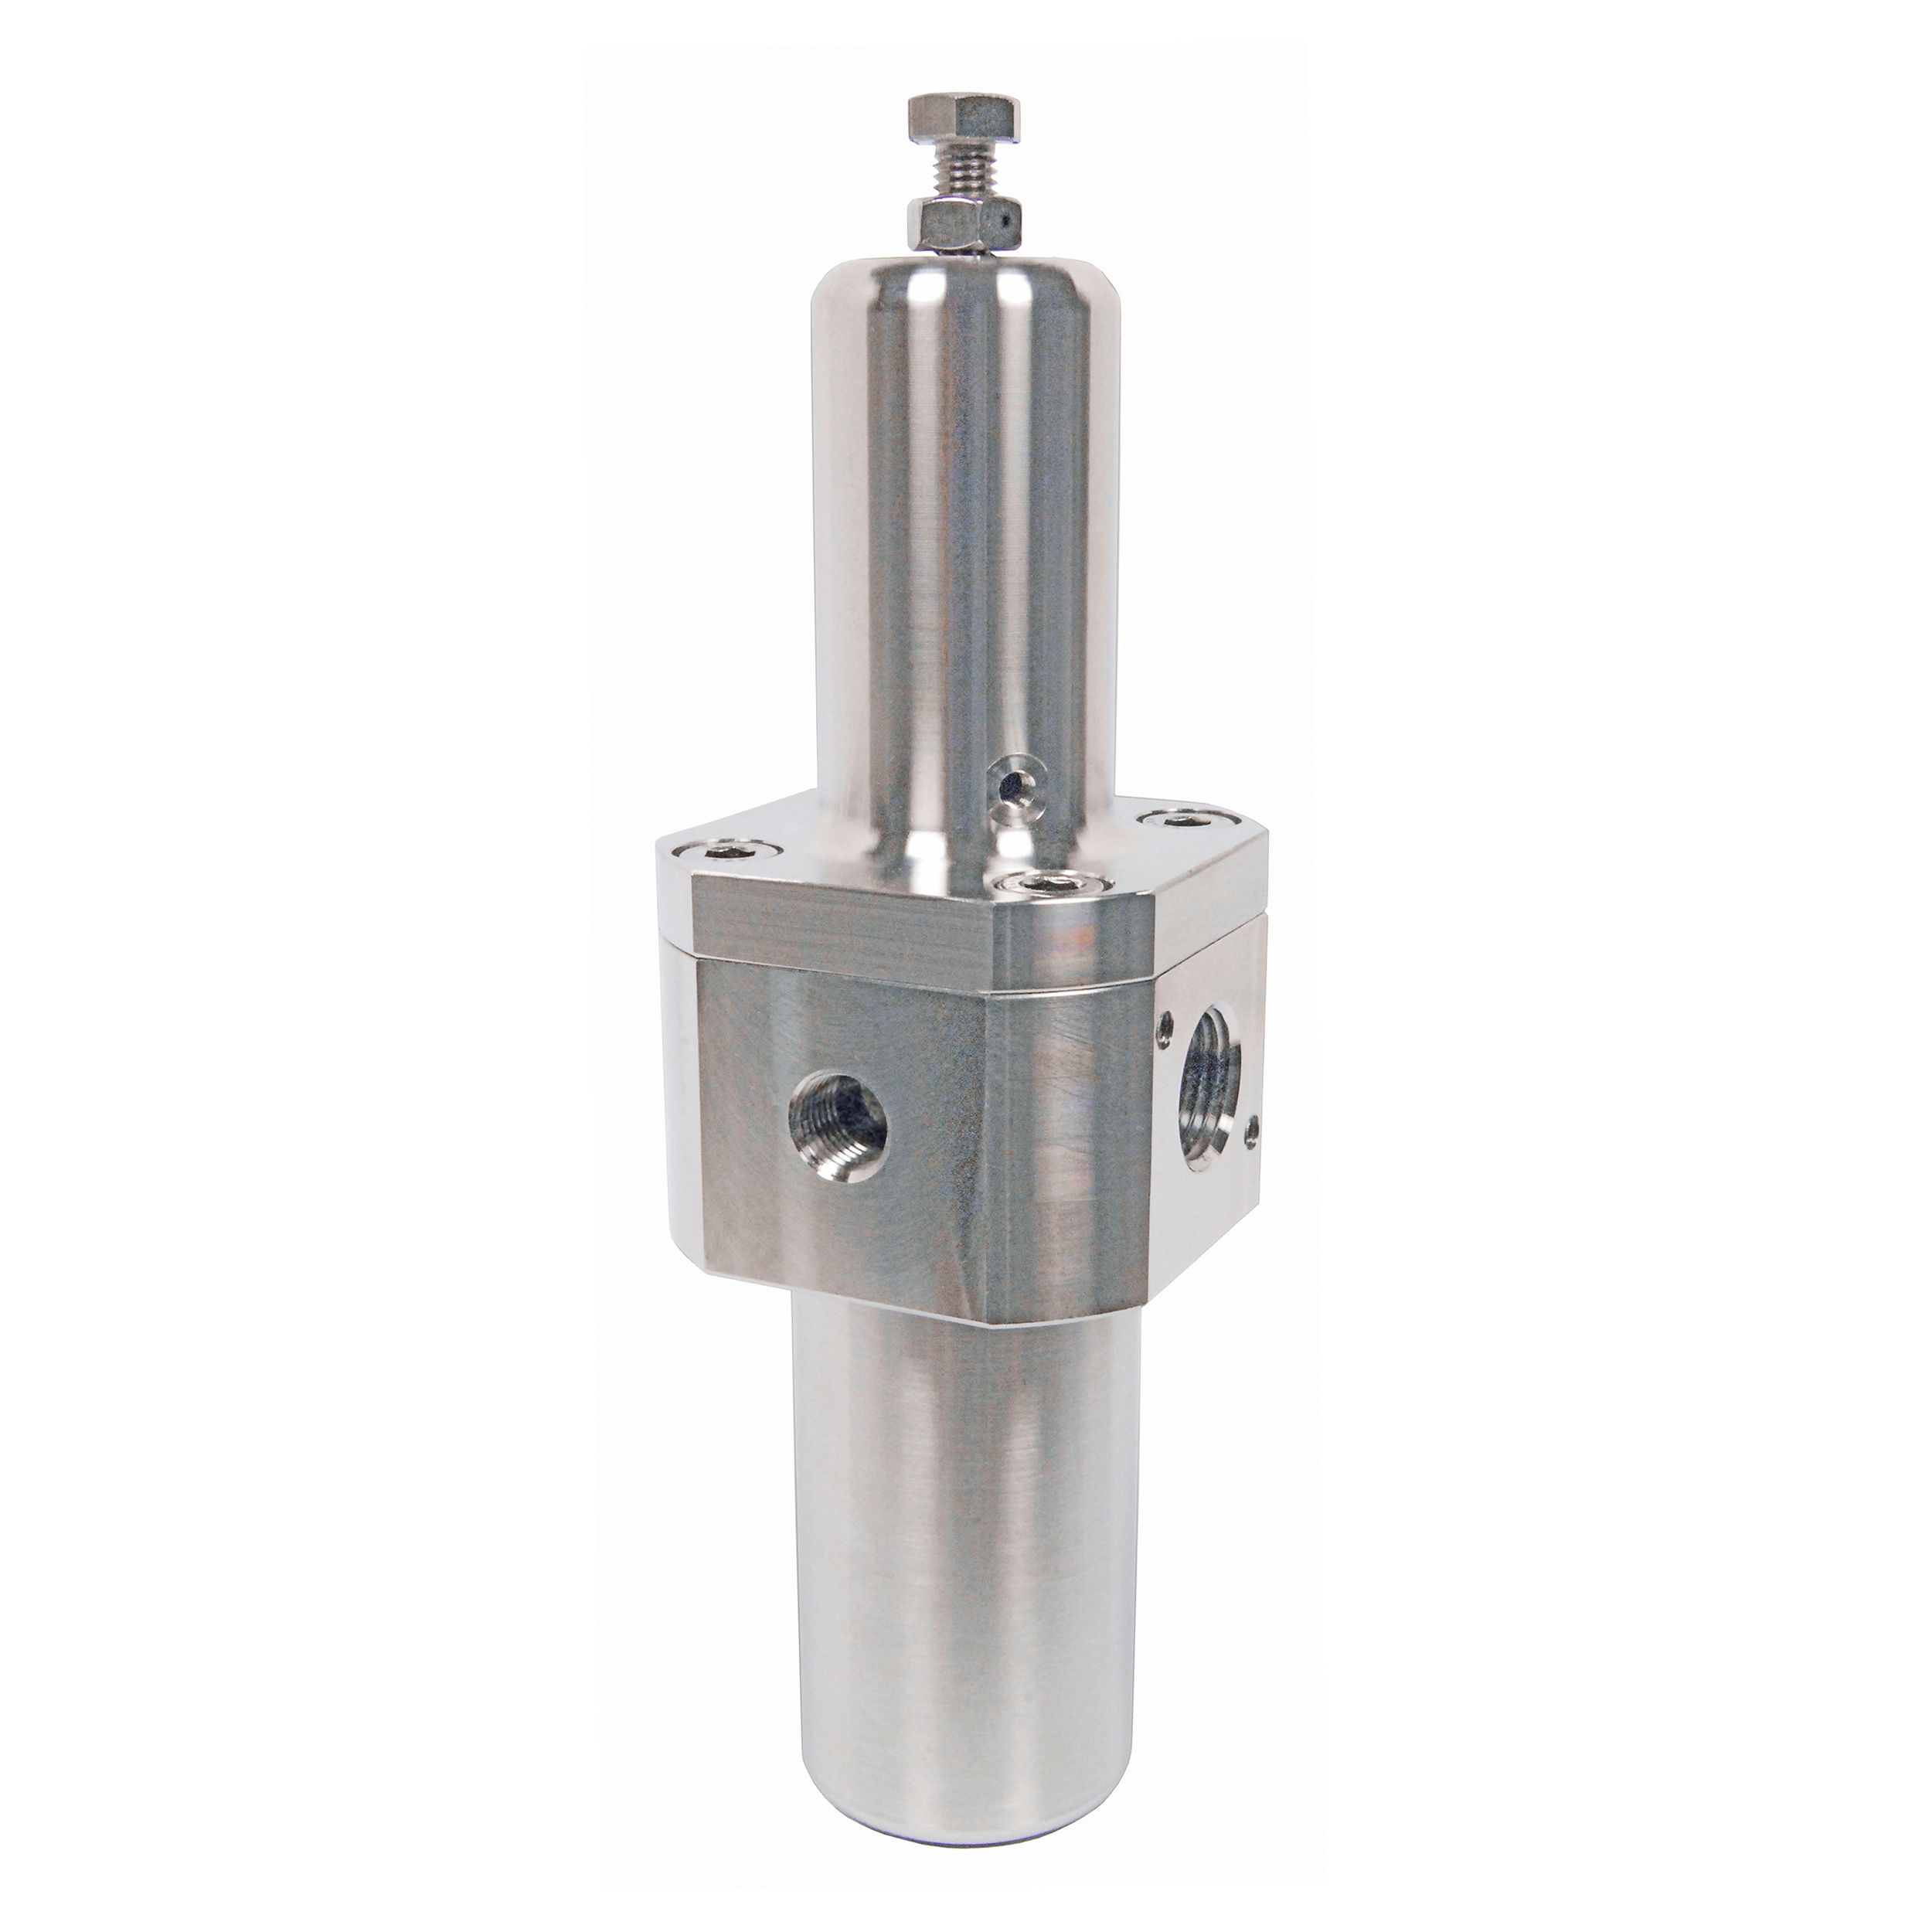 Filterdruckregler Typ 690 Edelstahl, ohne Manometer, BG 20, G¼, 1,0–15 bar, Handablassventil am Behälter, QN: 3.000 Nl/min